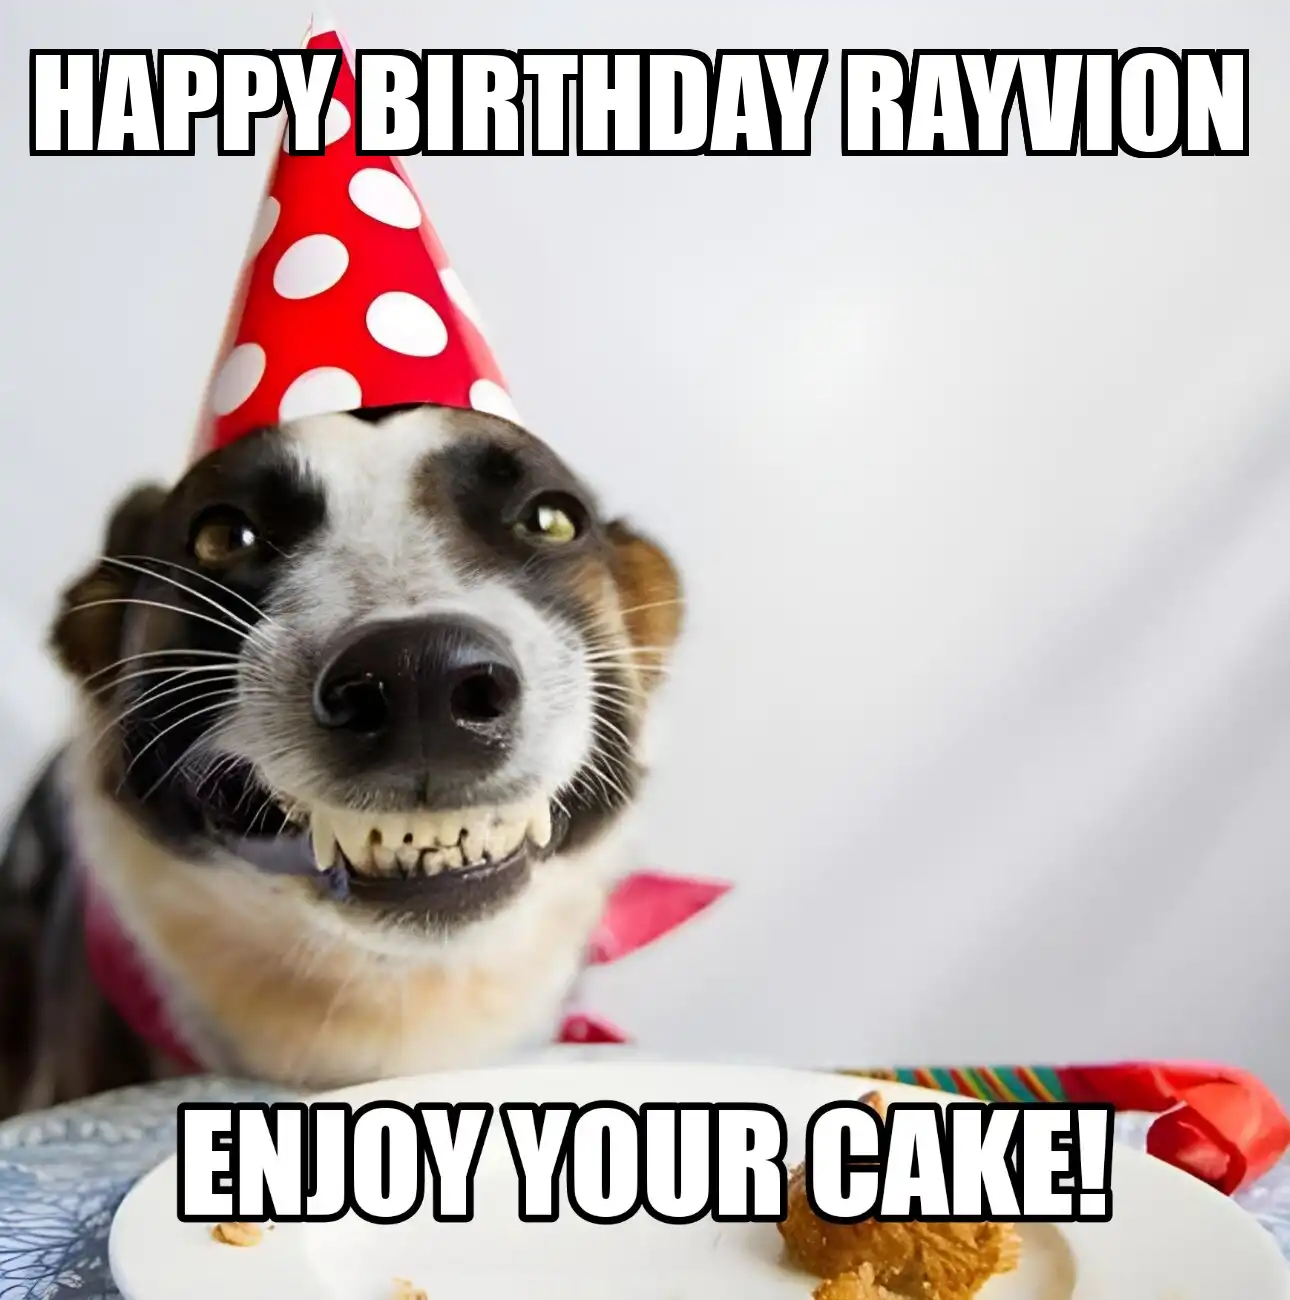 Happy Birthday Rayvion Enjoy Your Cake Dog Meme